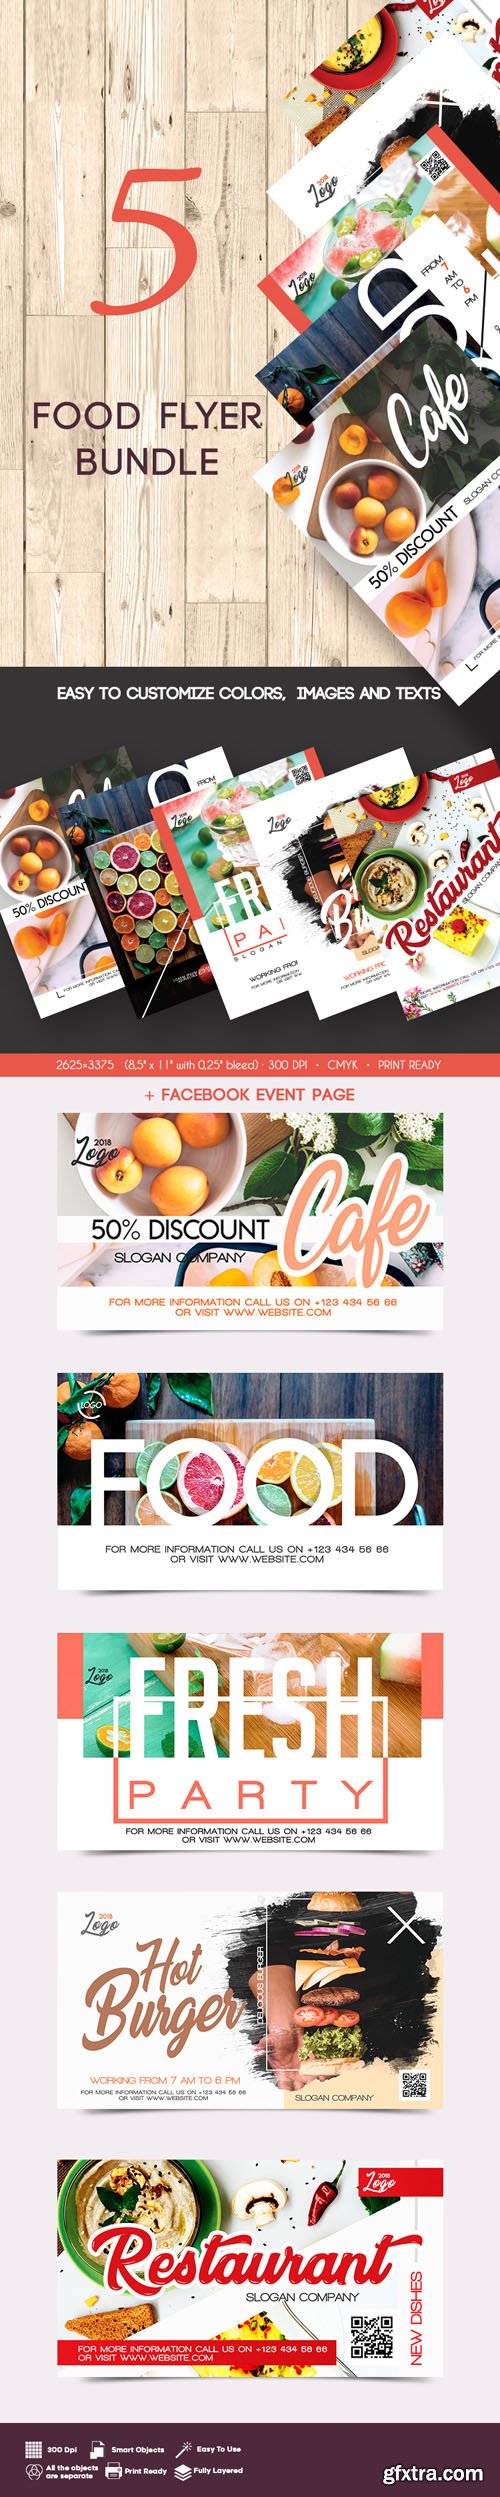 5 Food Flyer Bundle in PSD